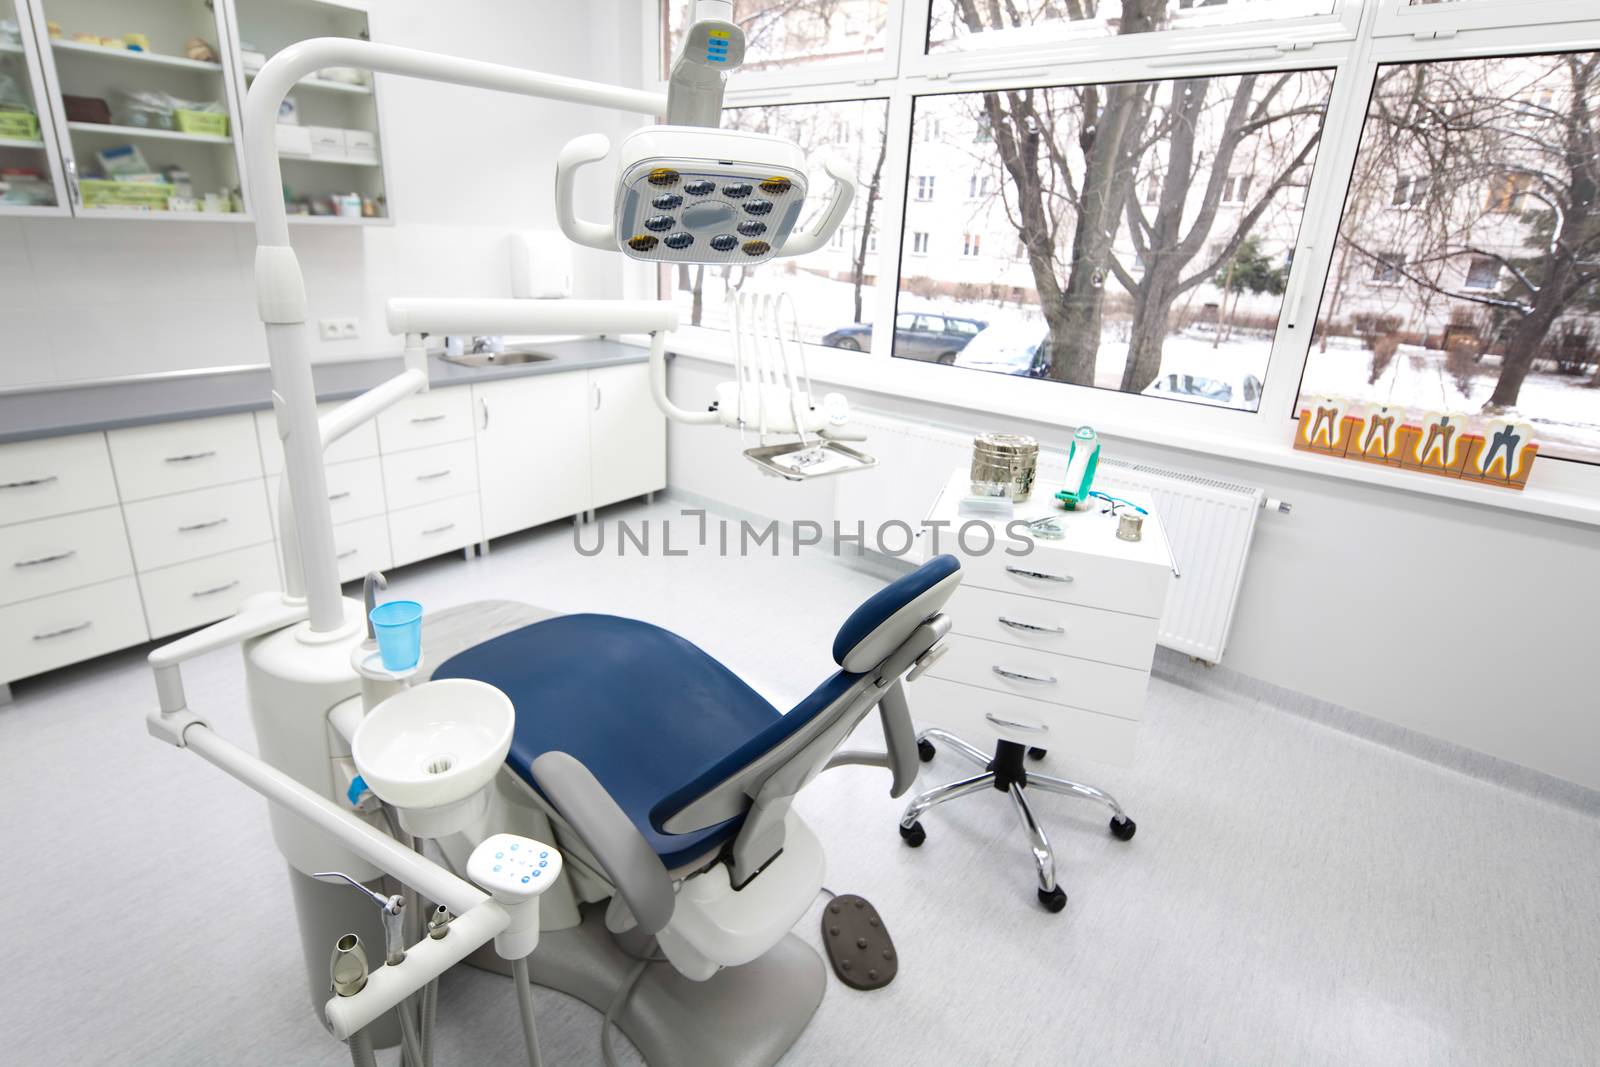 Dentist office, equipment, bright colorful tone concept